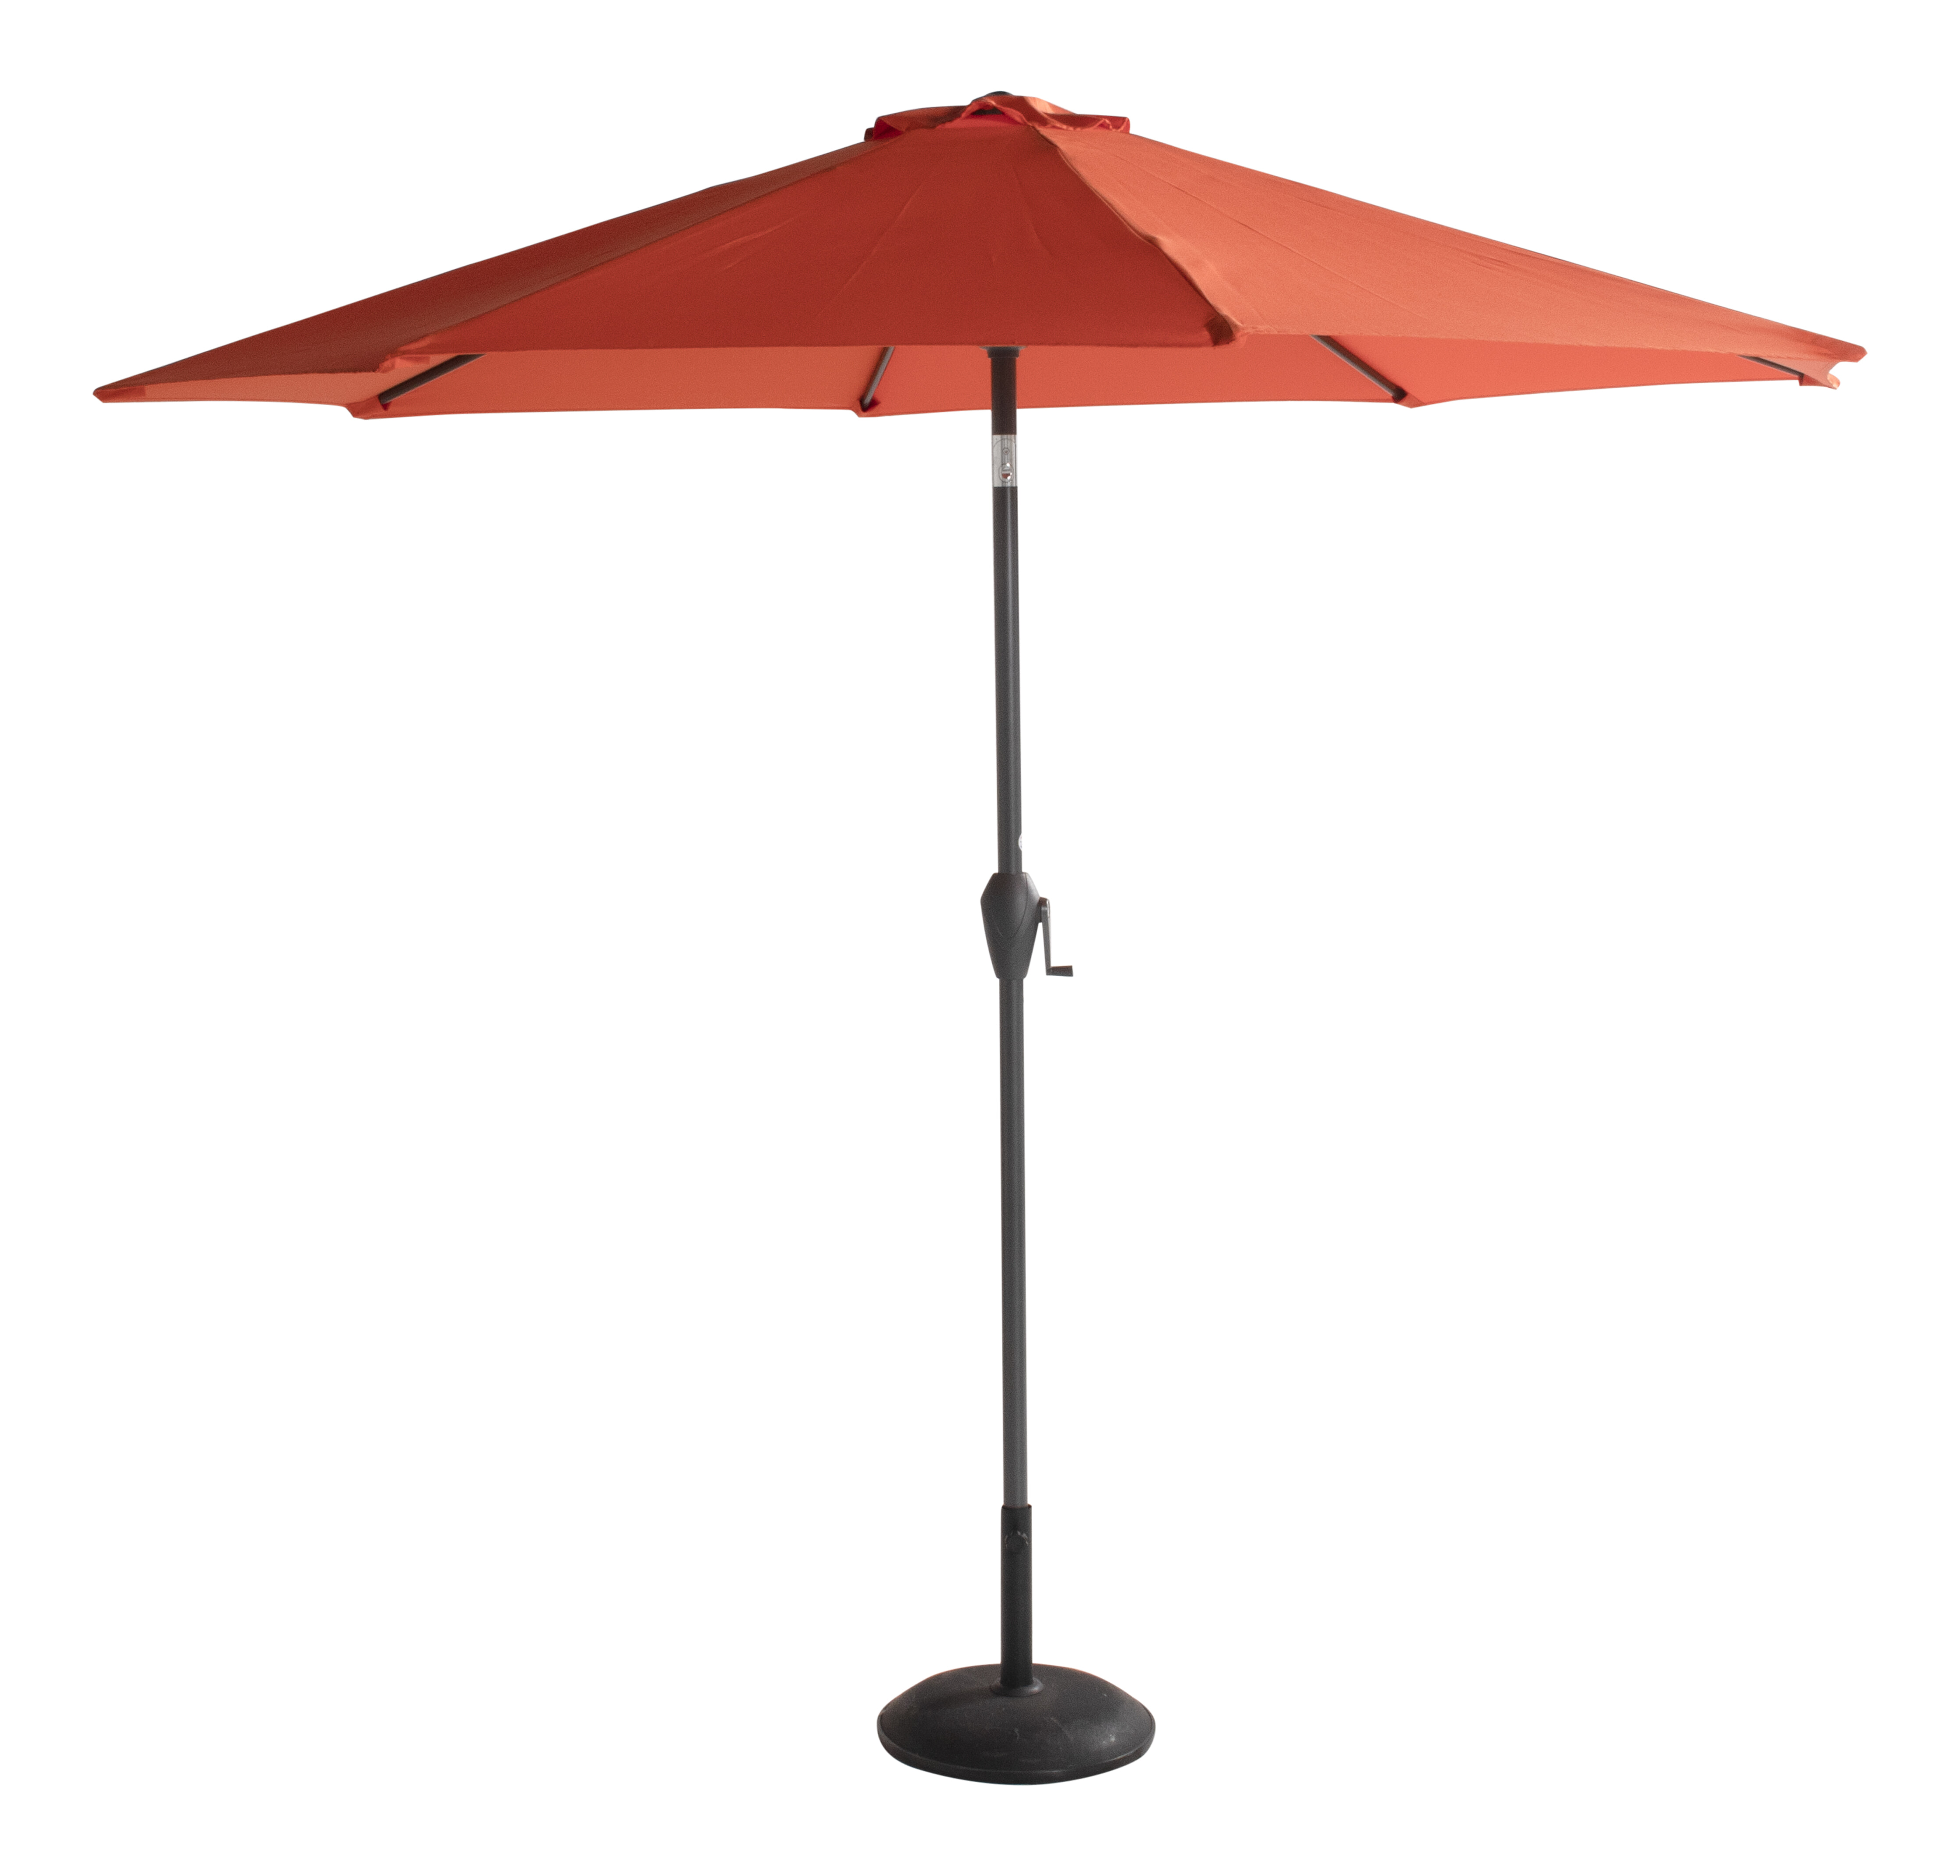 Hartman sunline parasol 270cm rond orange.